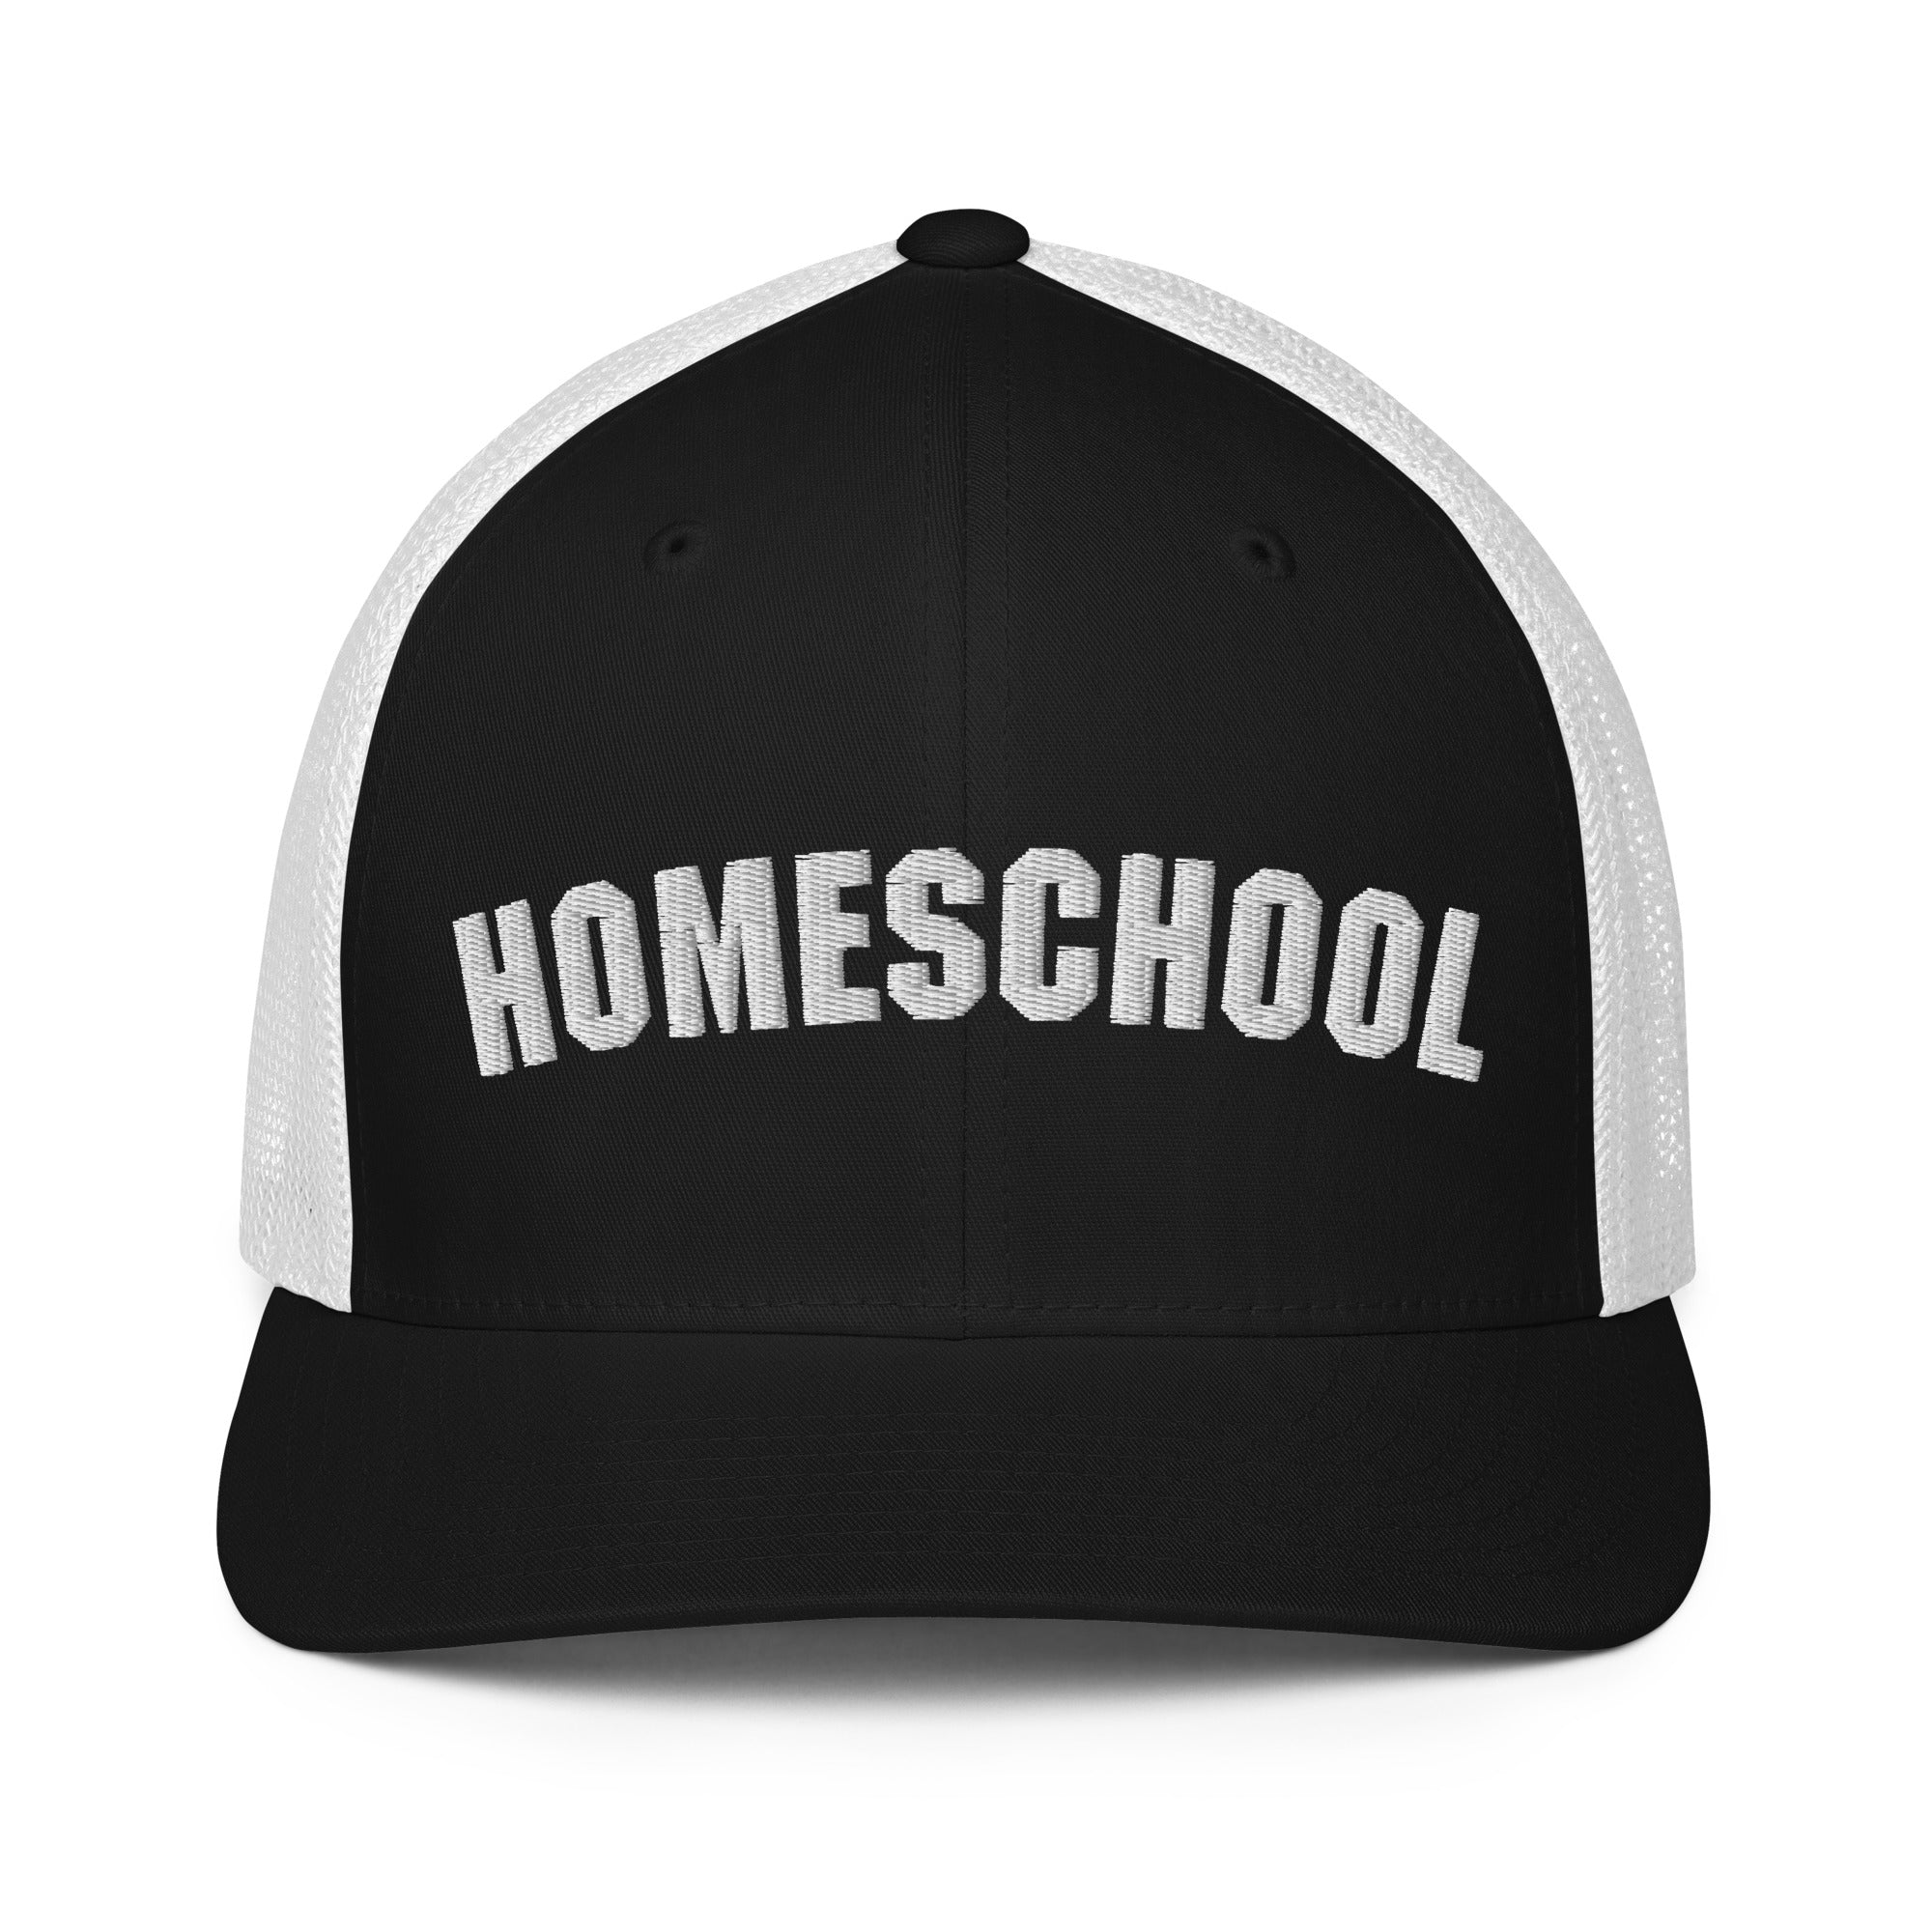 Homeschool Closed-back Flexfit Trucker Hat